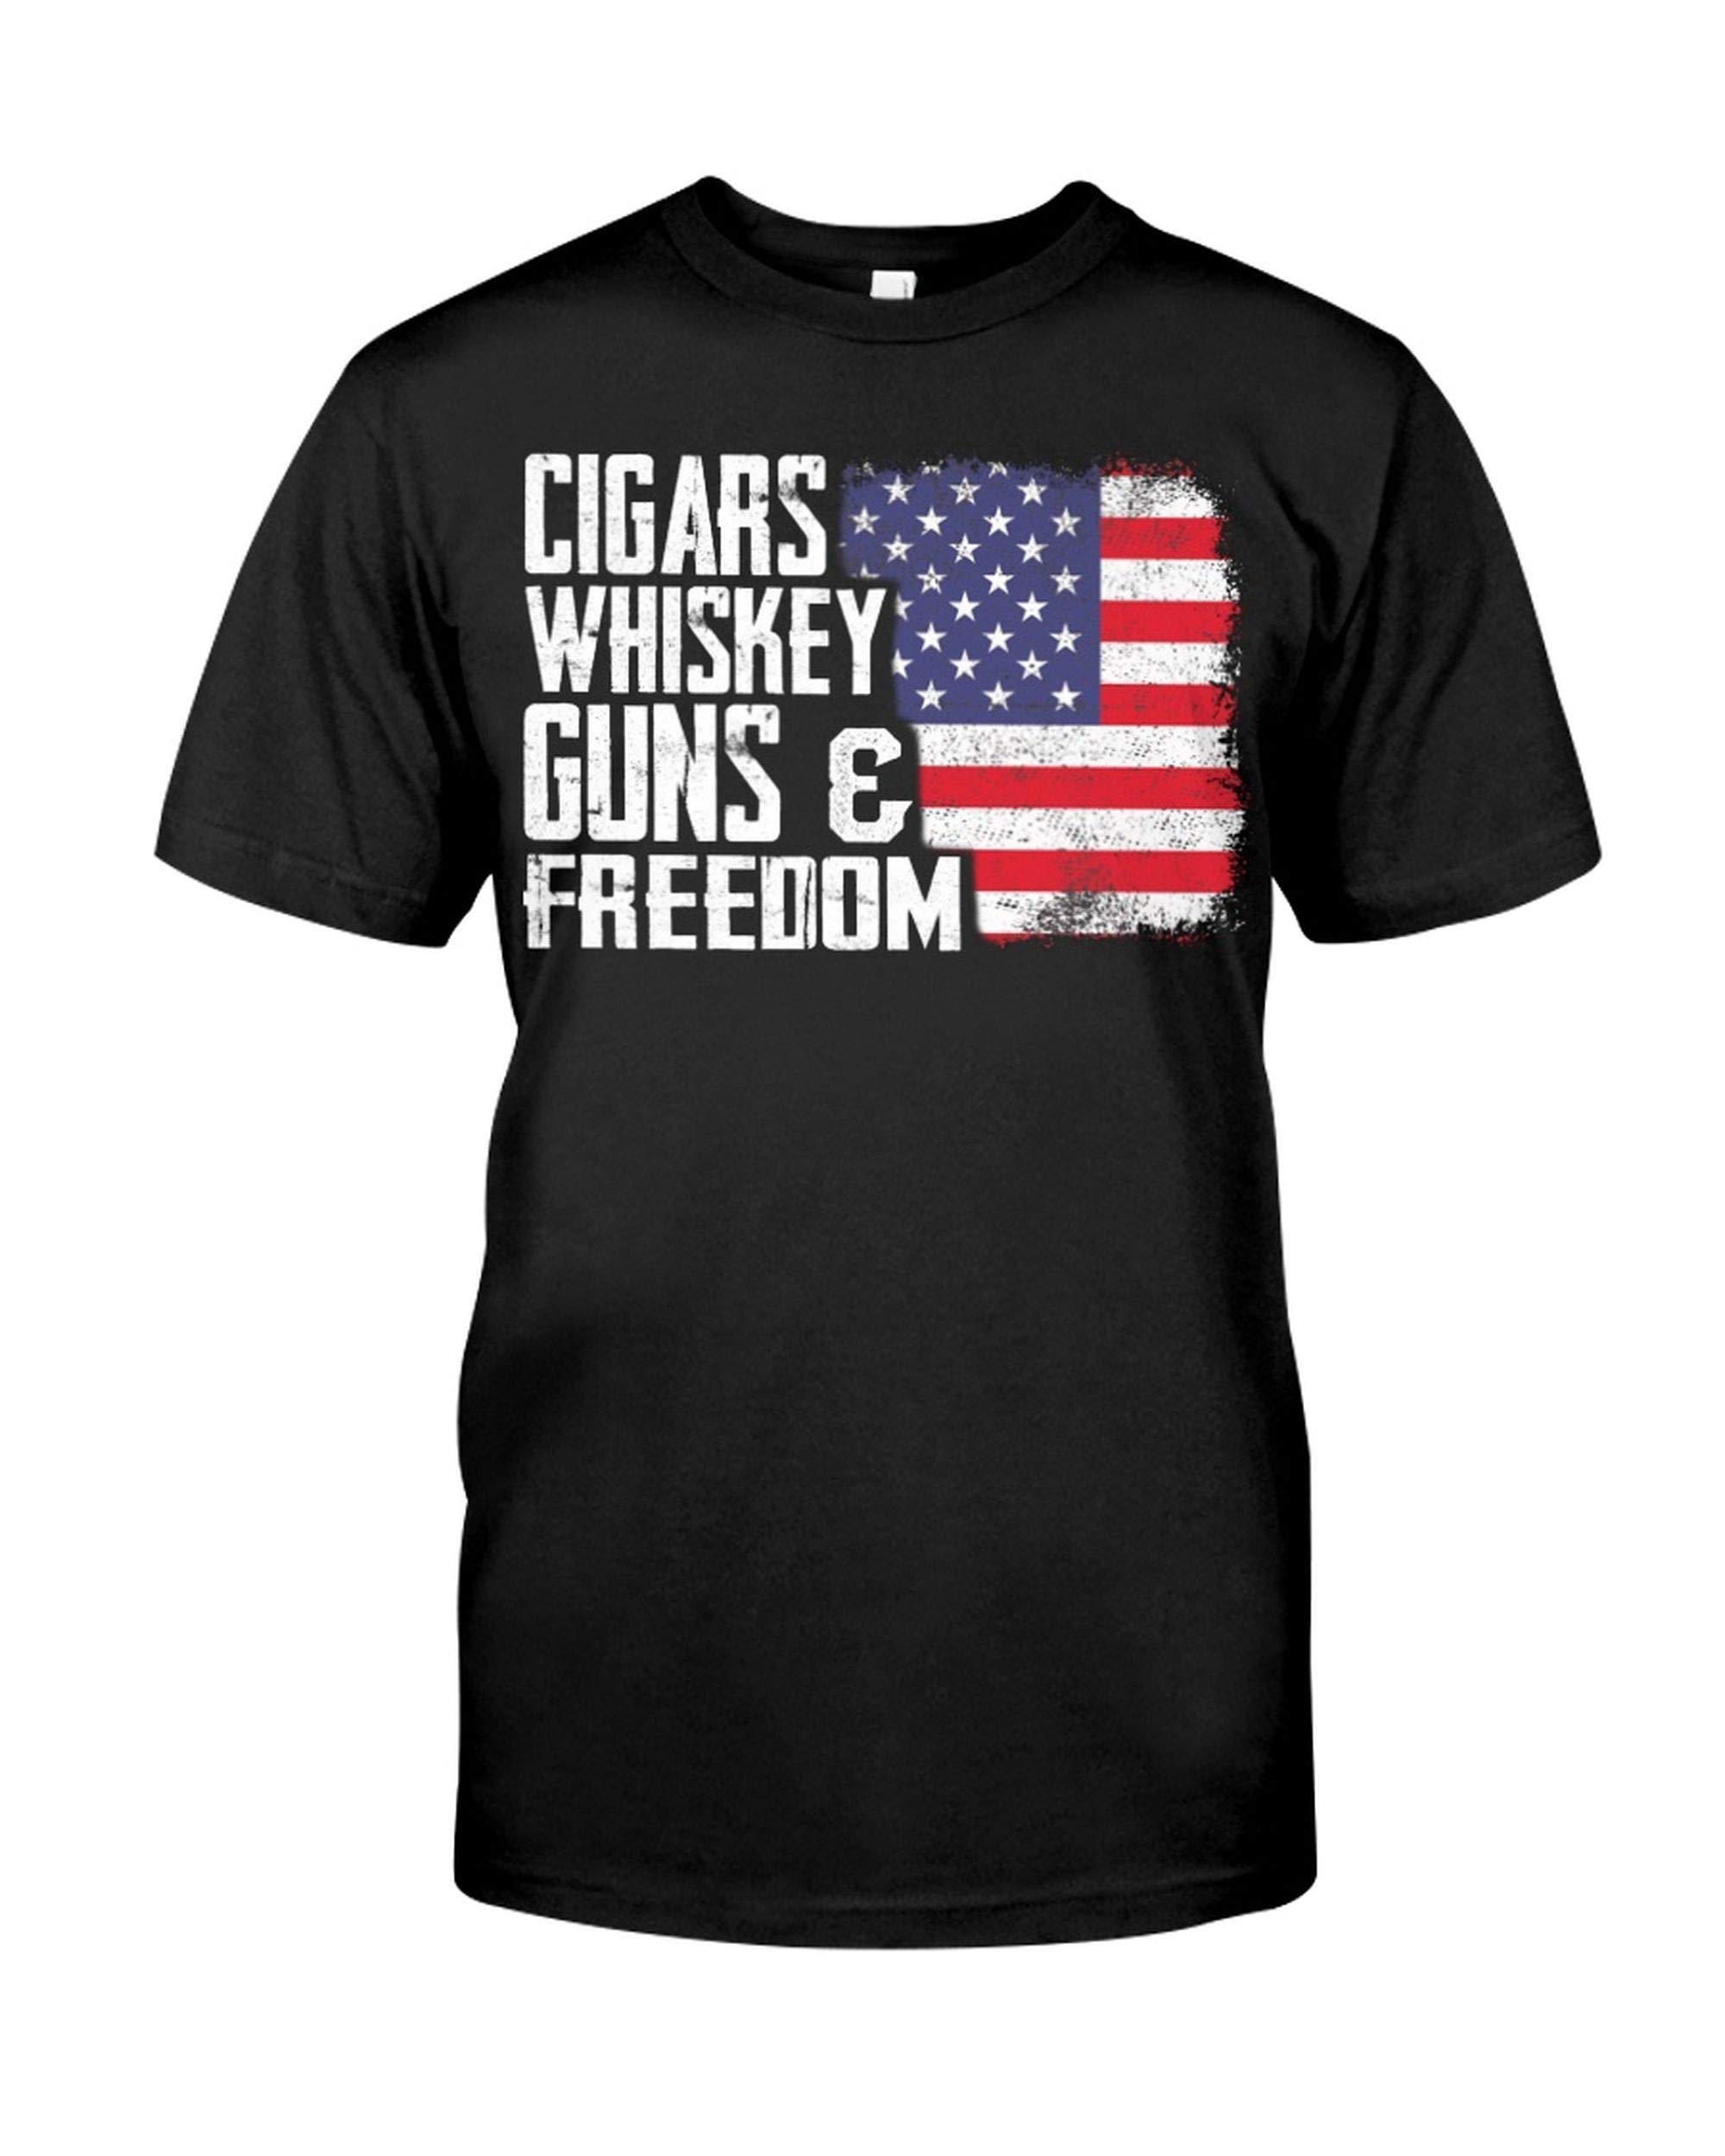 ANDIEZ Cigars Whiskey Guns Freedom Flag Shirt